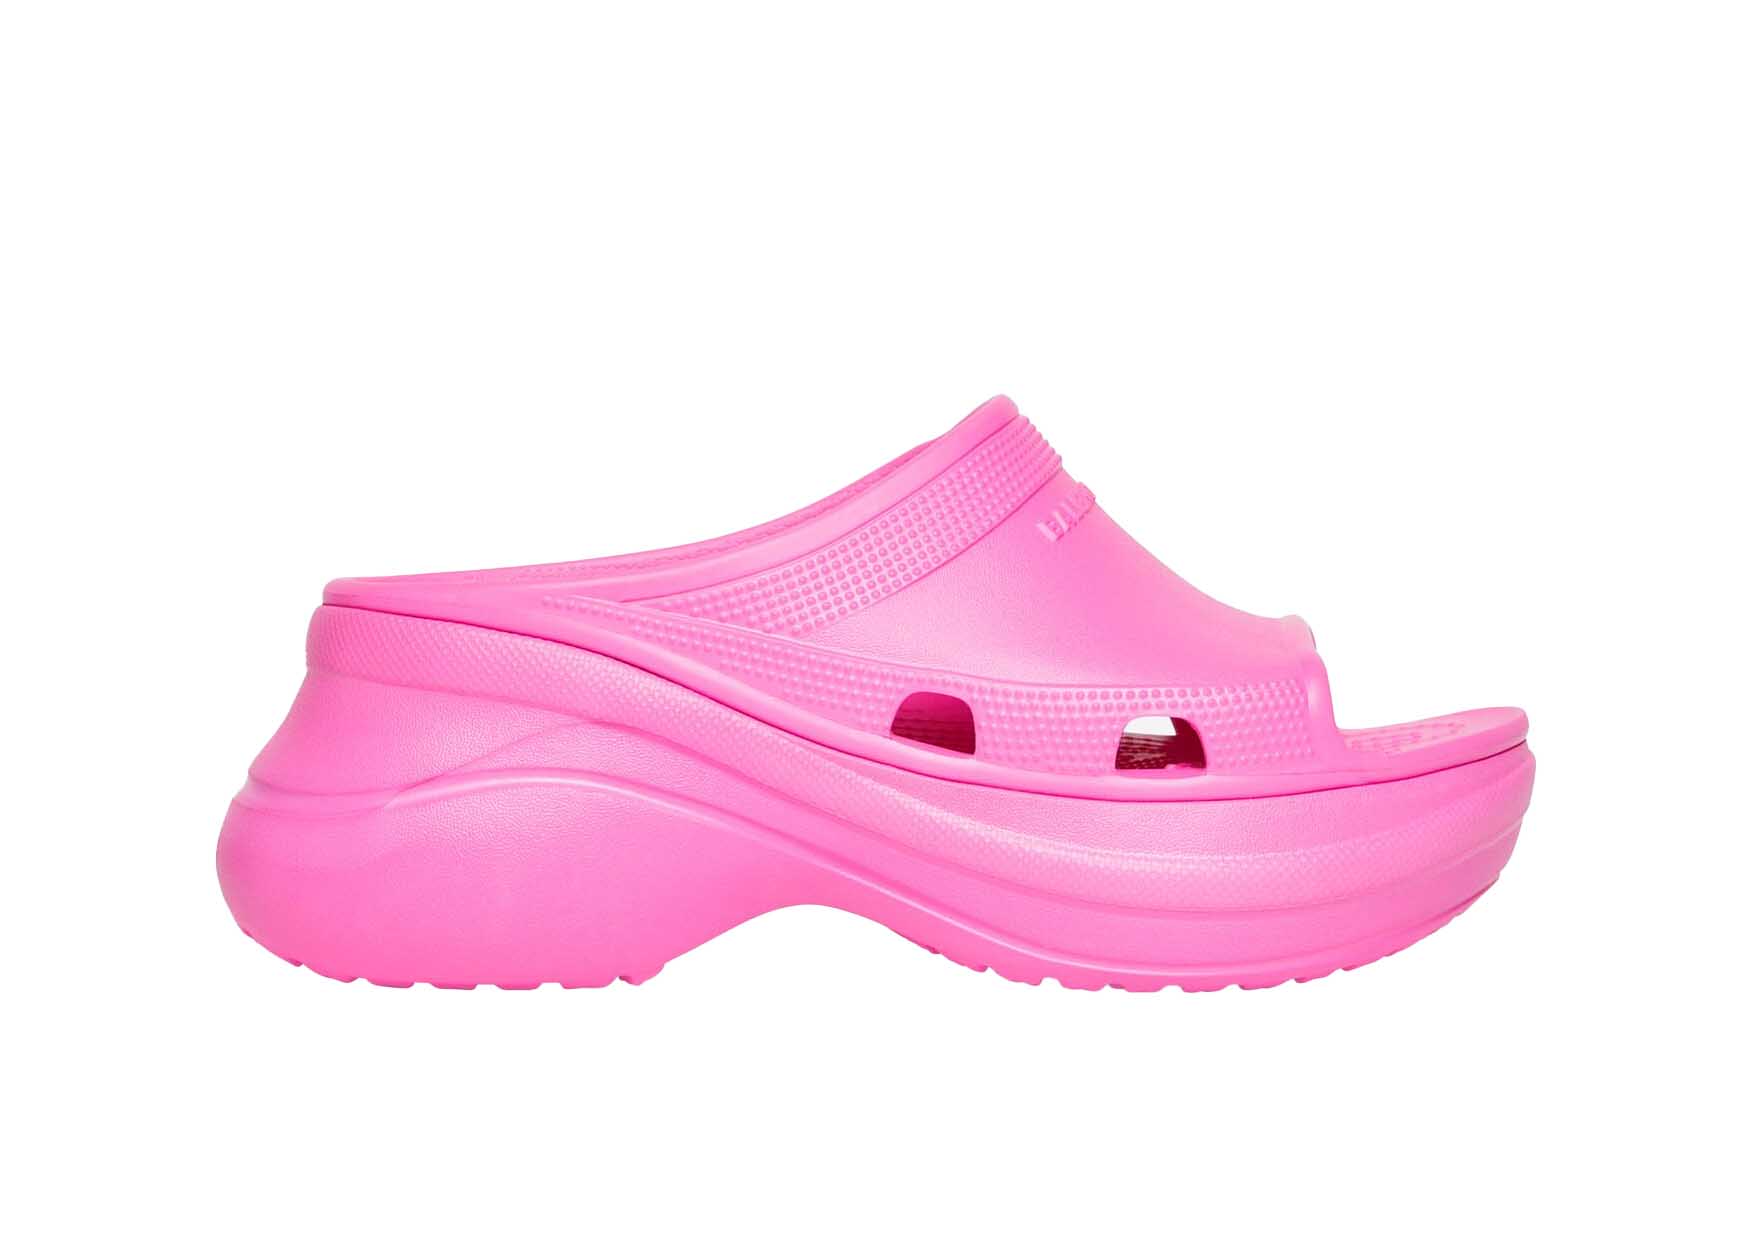 Balenciaga x Crocs Pool Slide Sandals Pink (Women's)